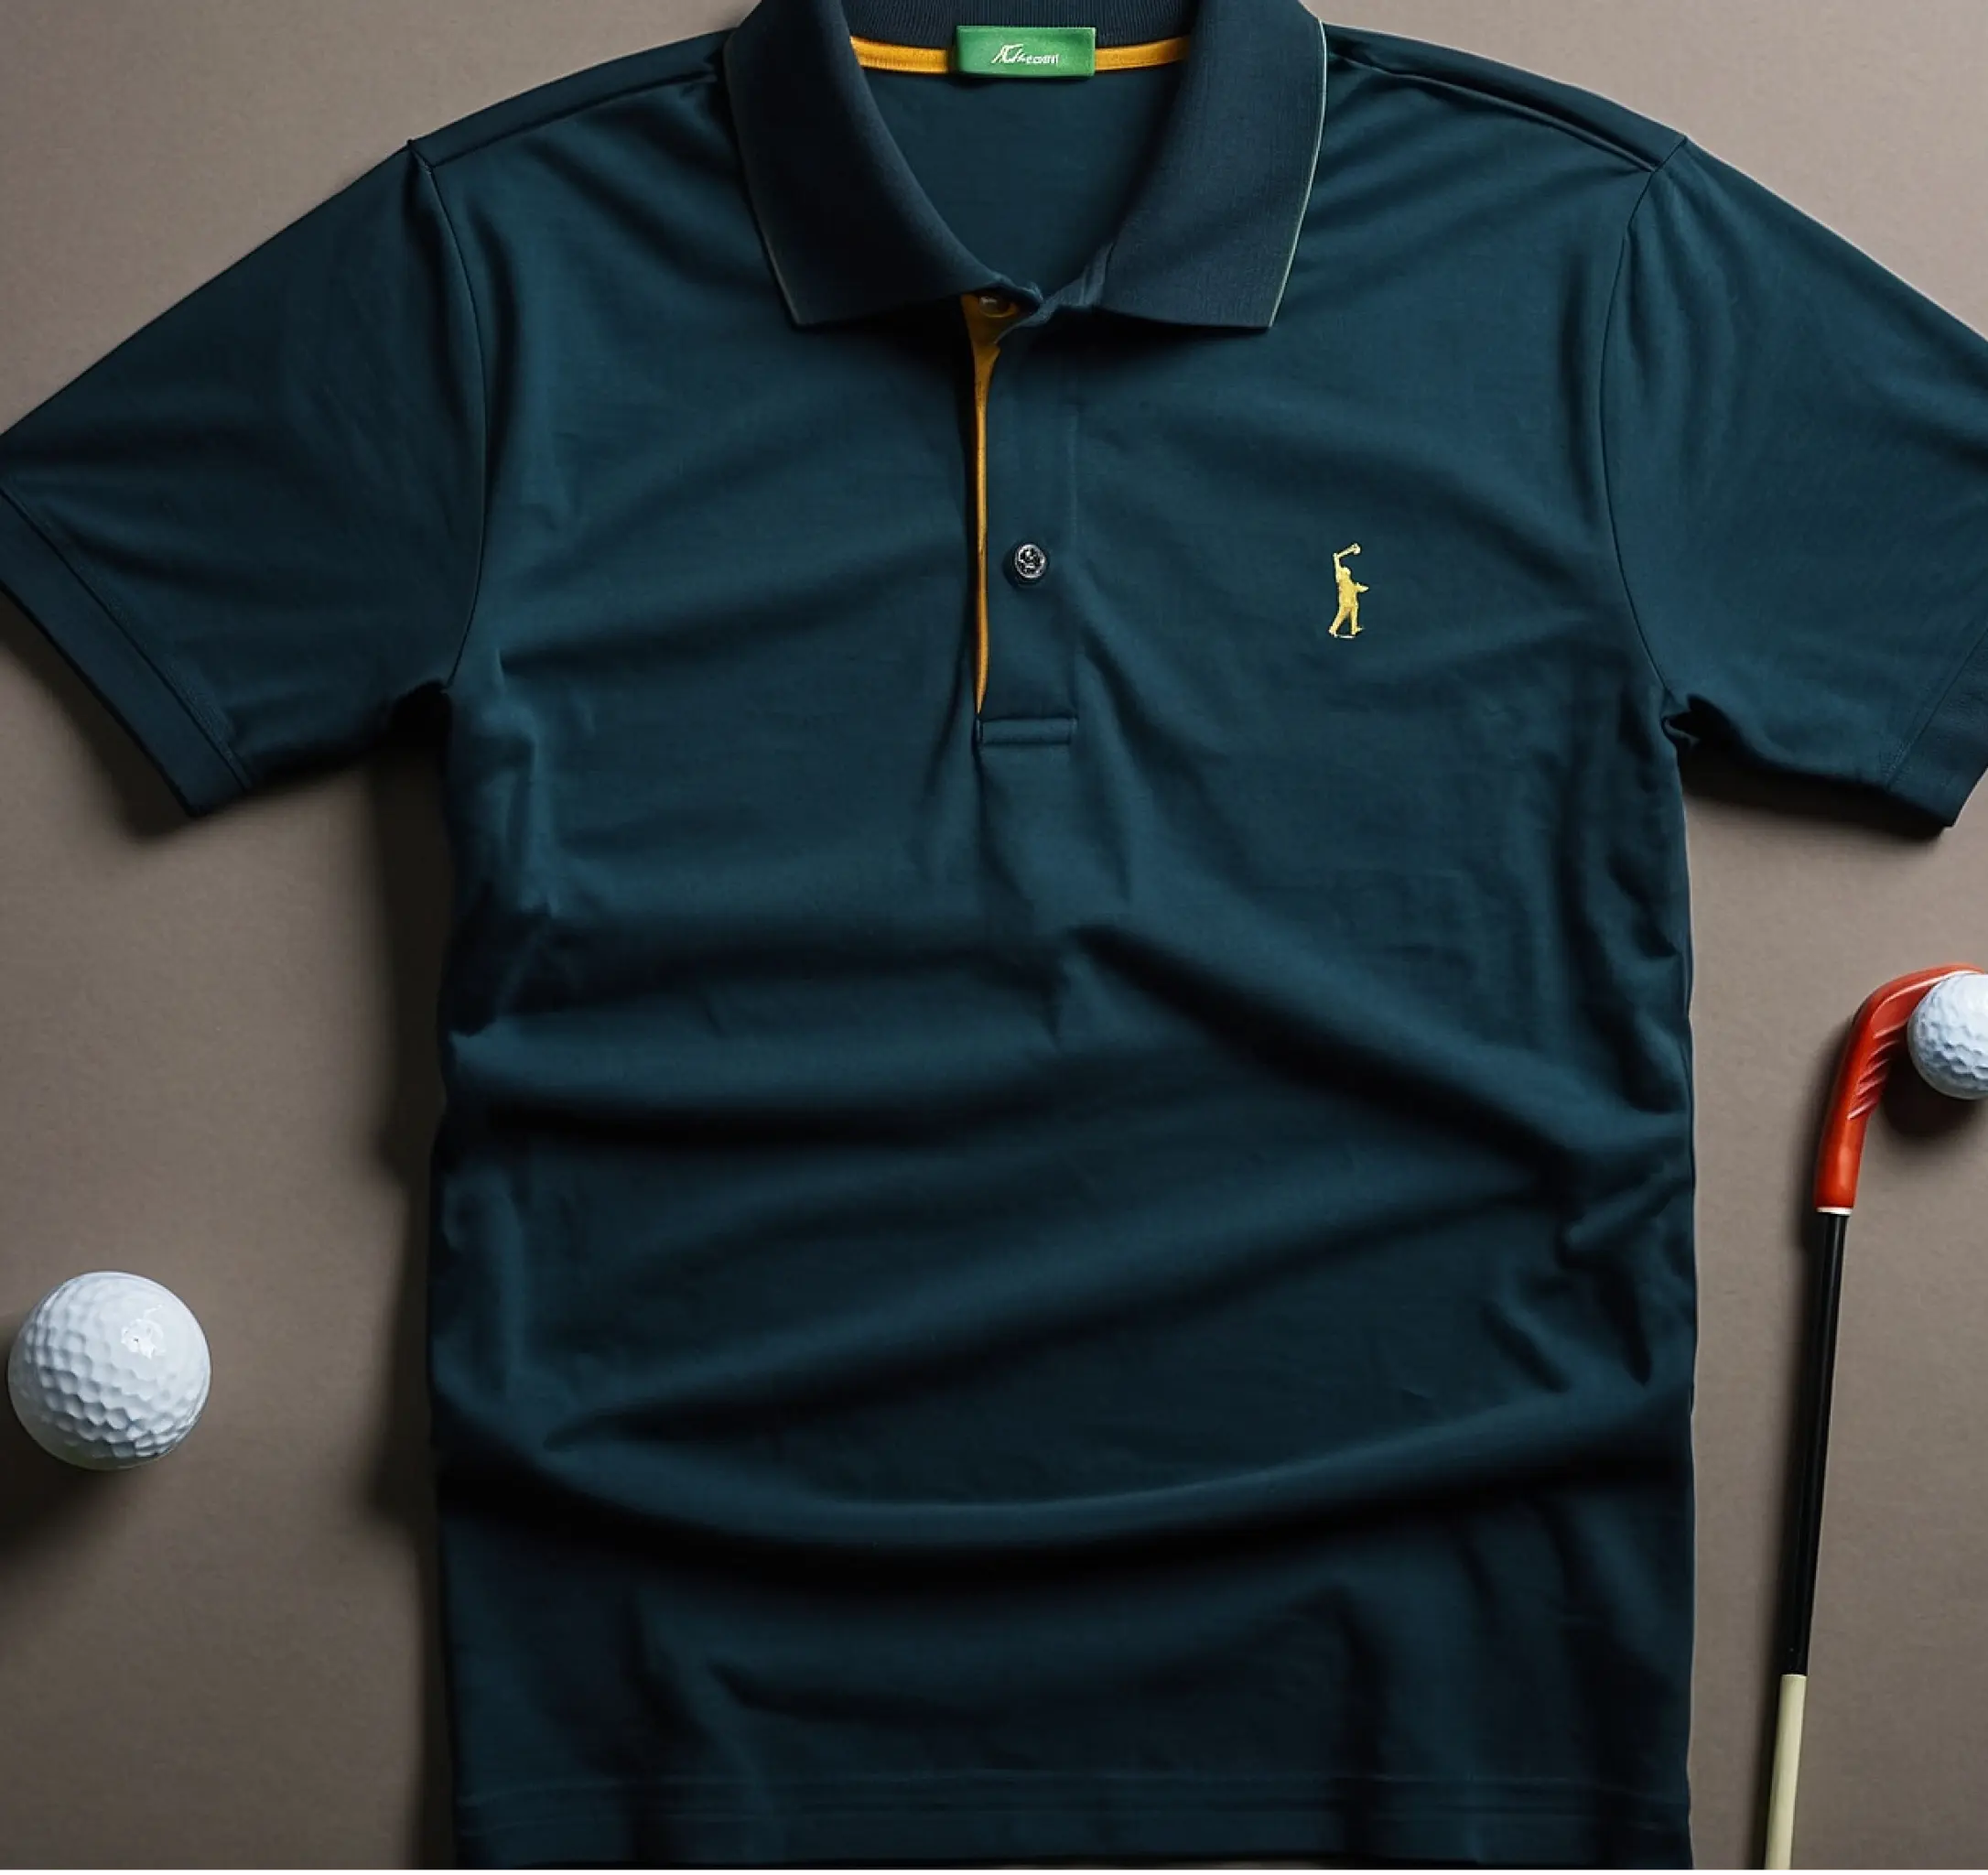 Green golf polo shirt